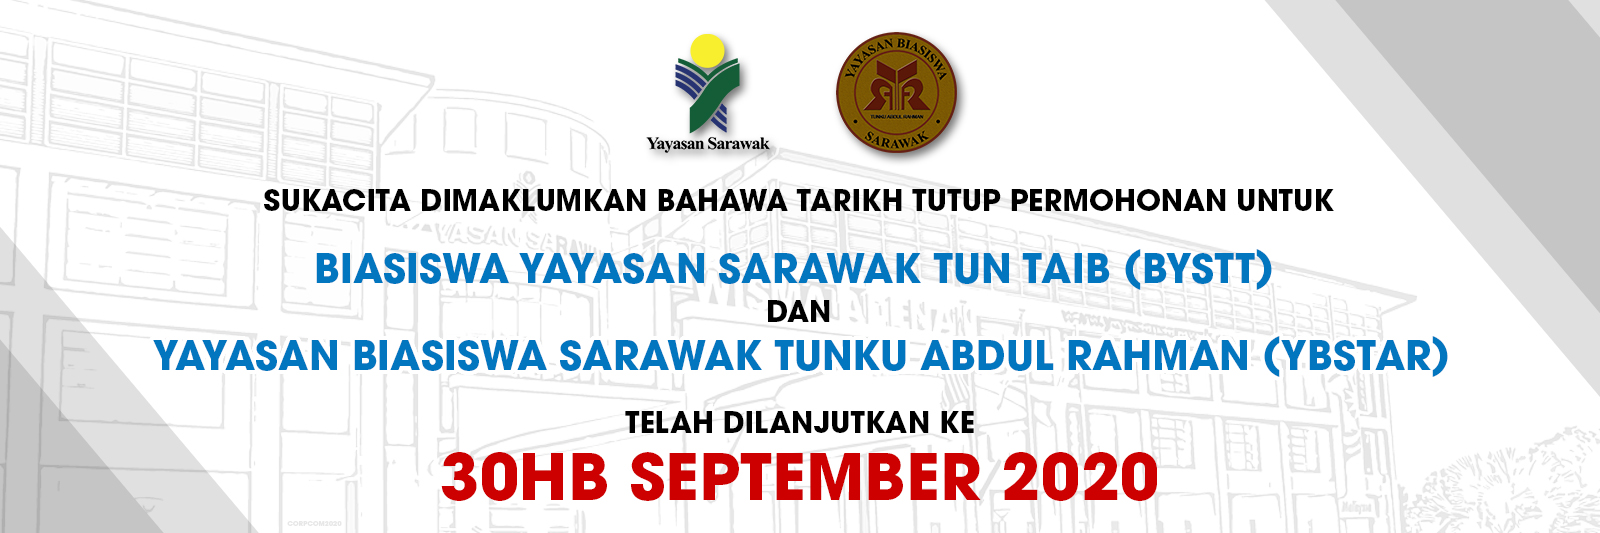 Permohonan Biasiswa Yayasan Sarawak 2019